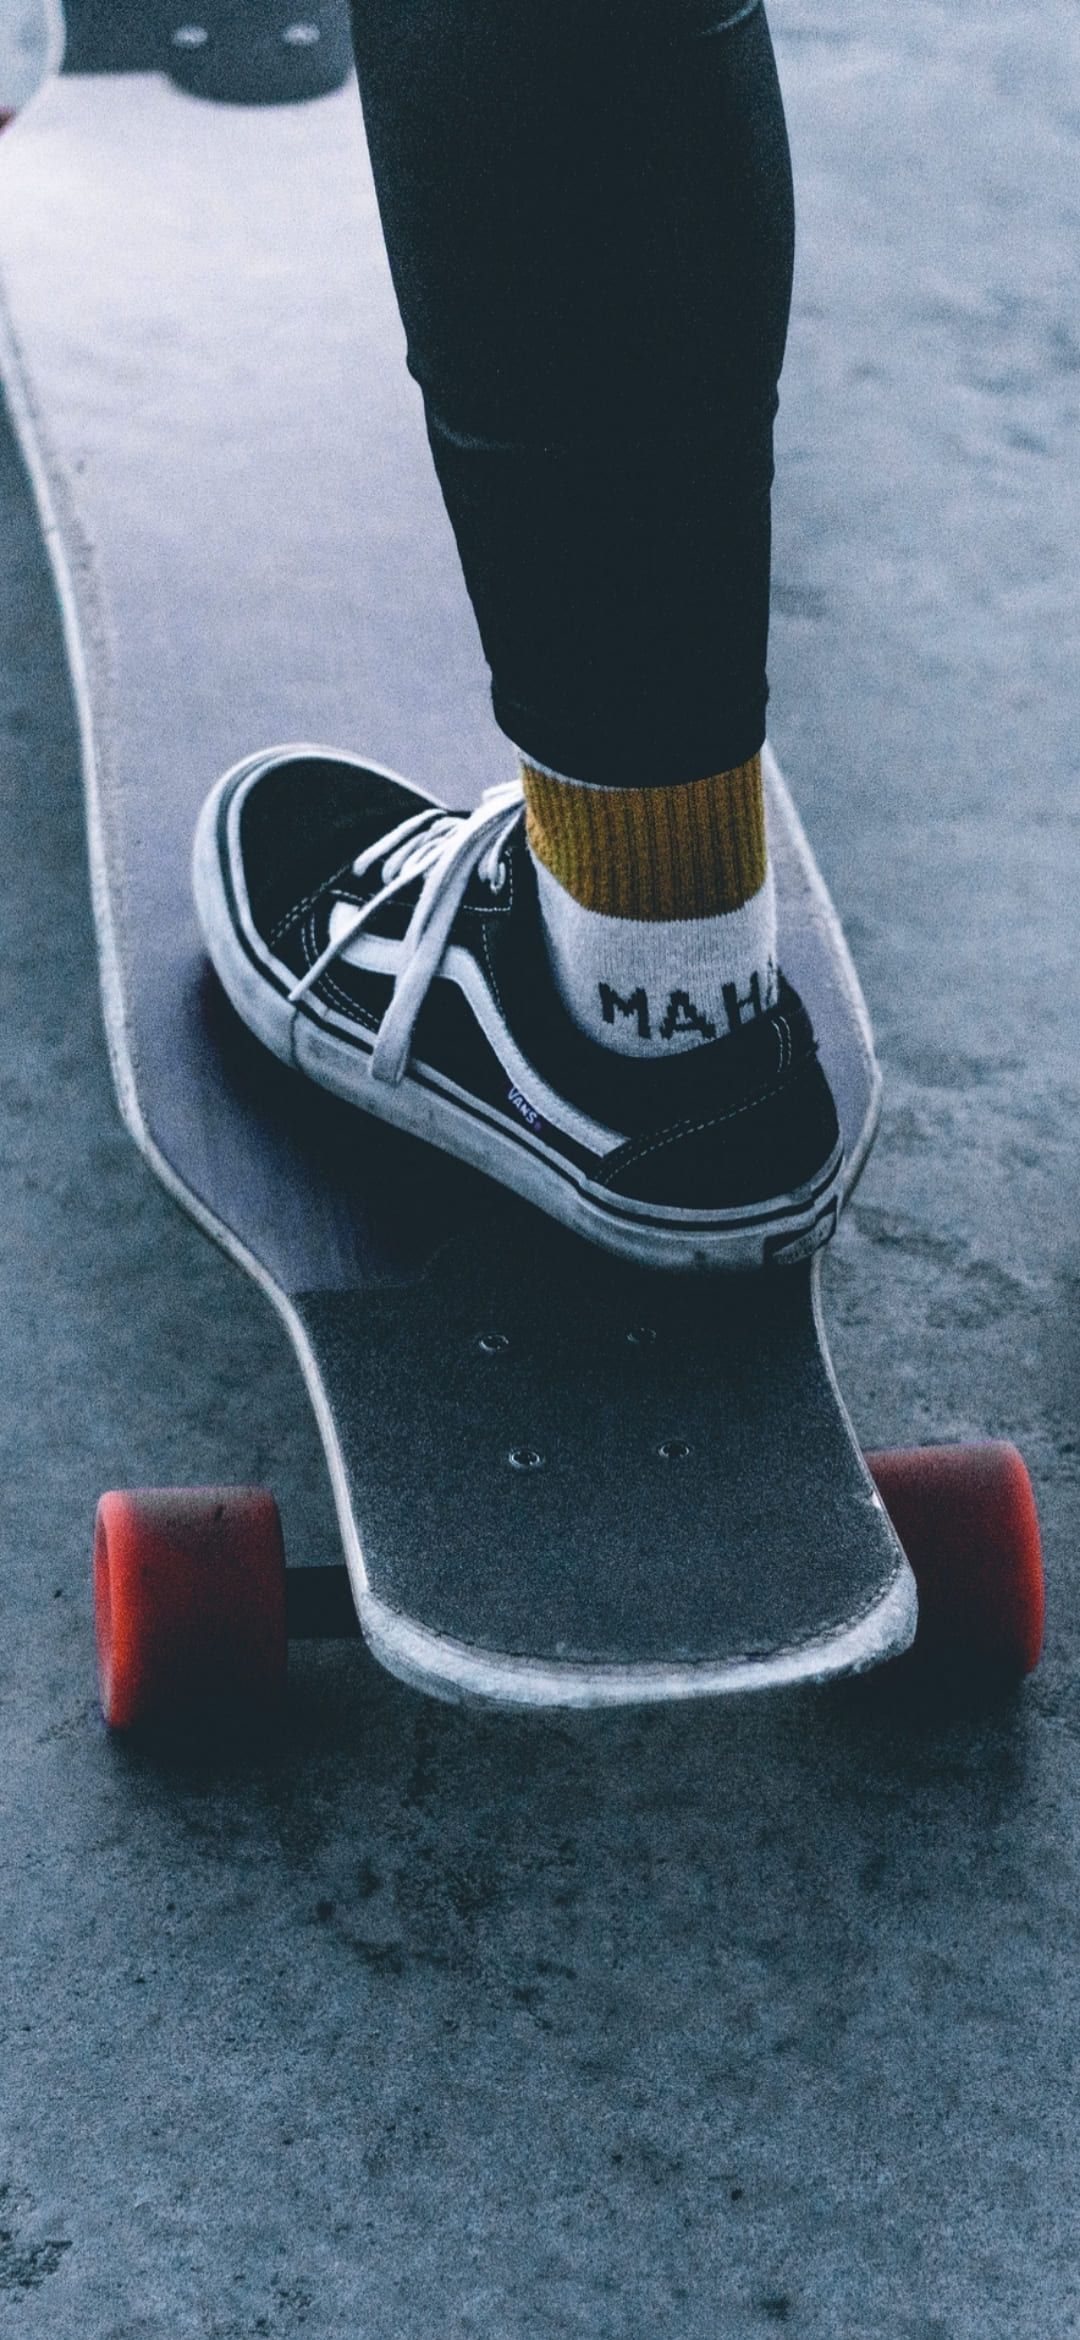 Best Skateboard iPhone Wallpaper